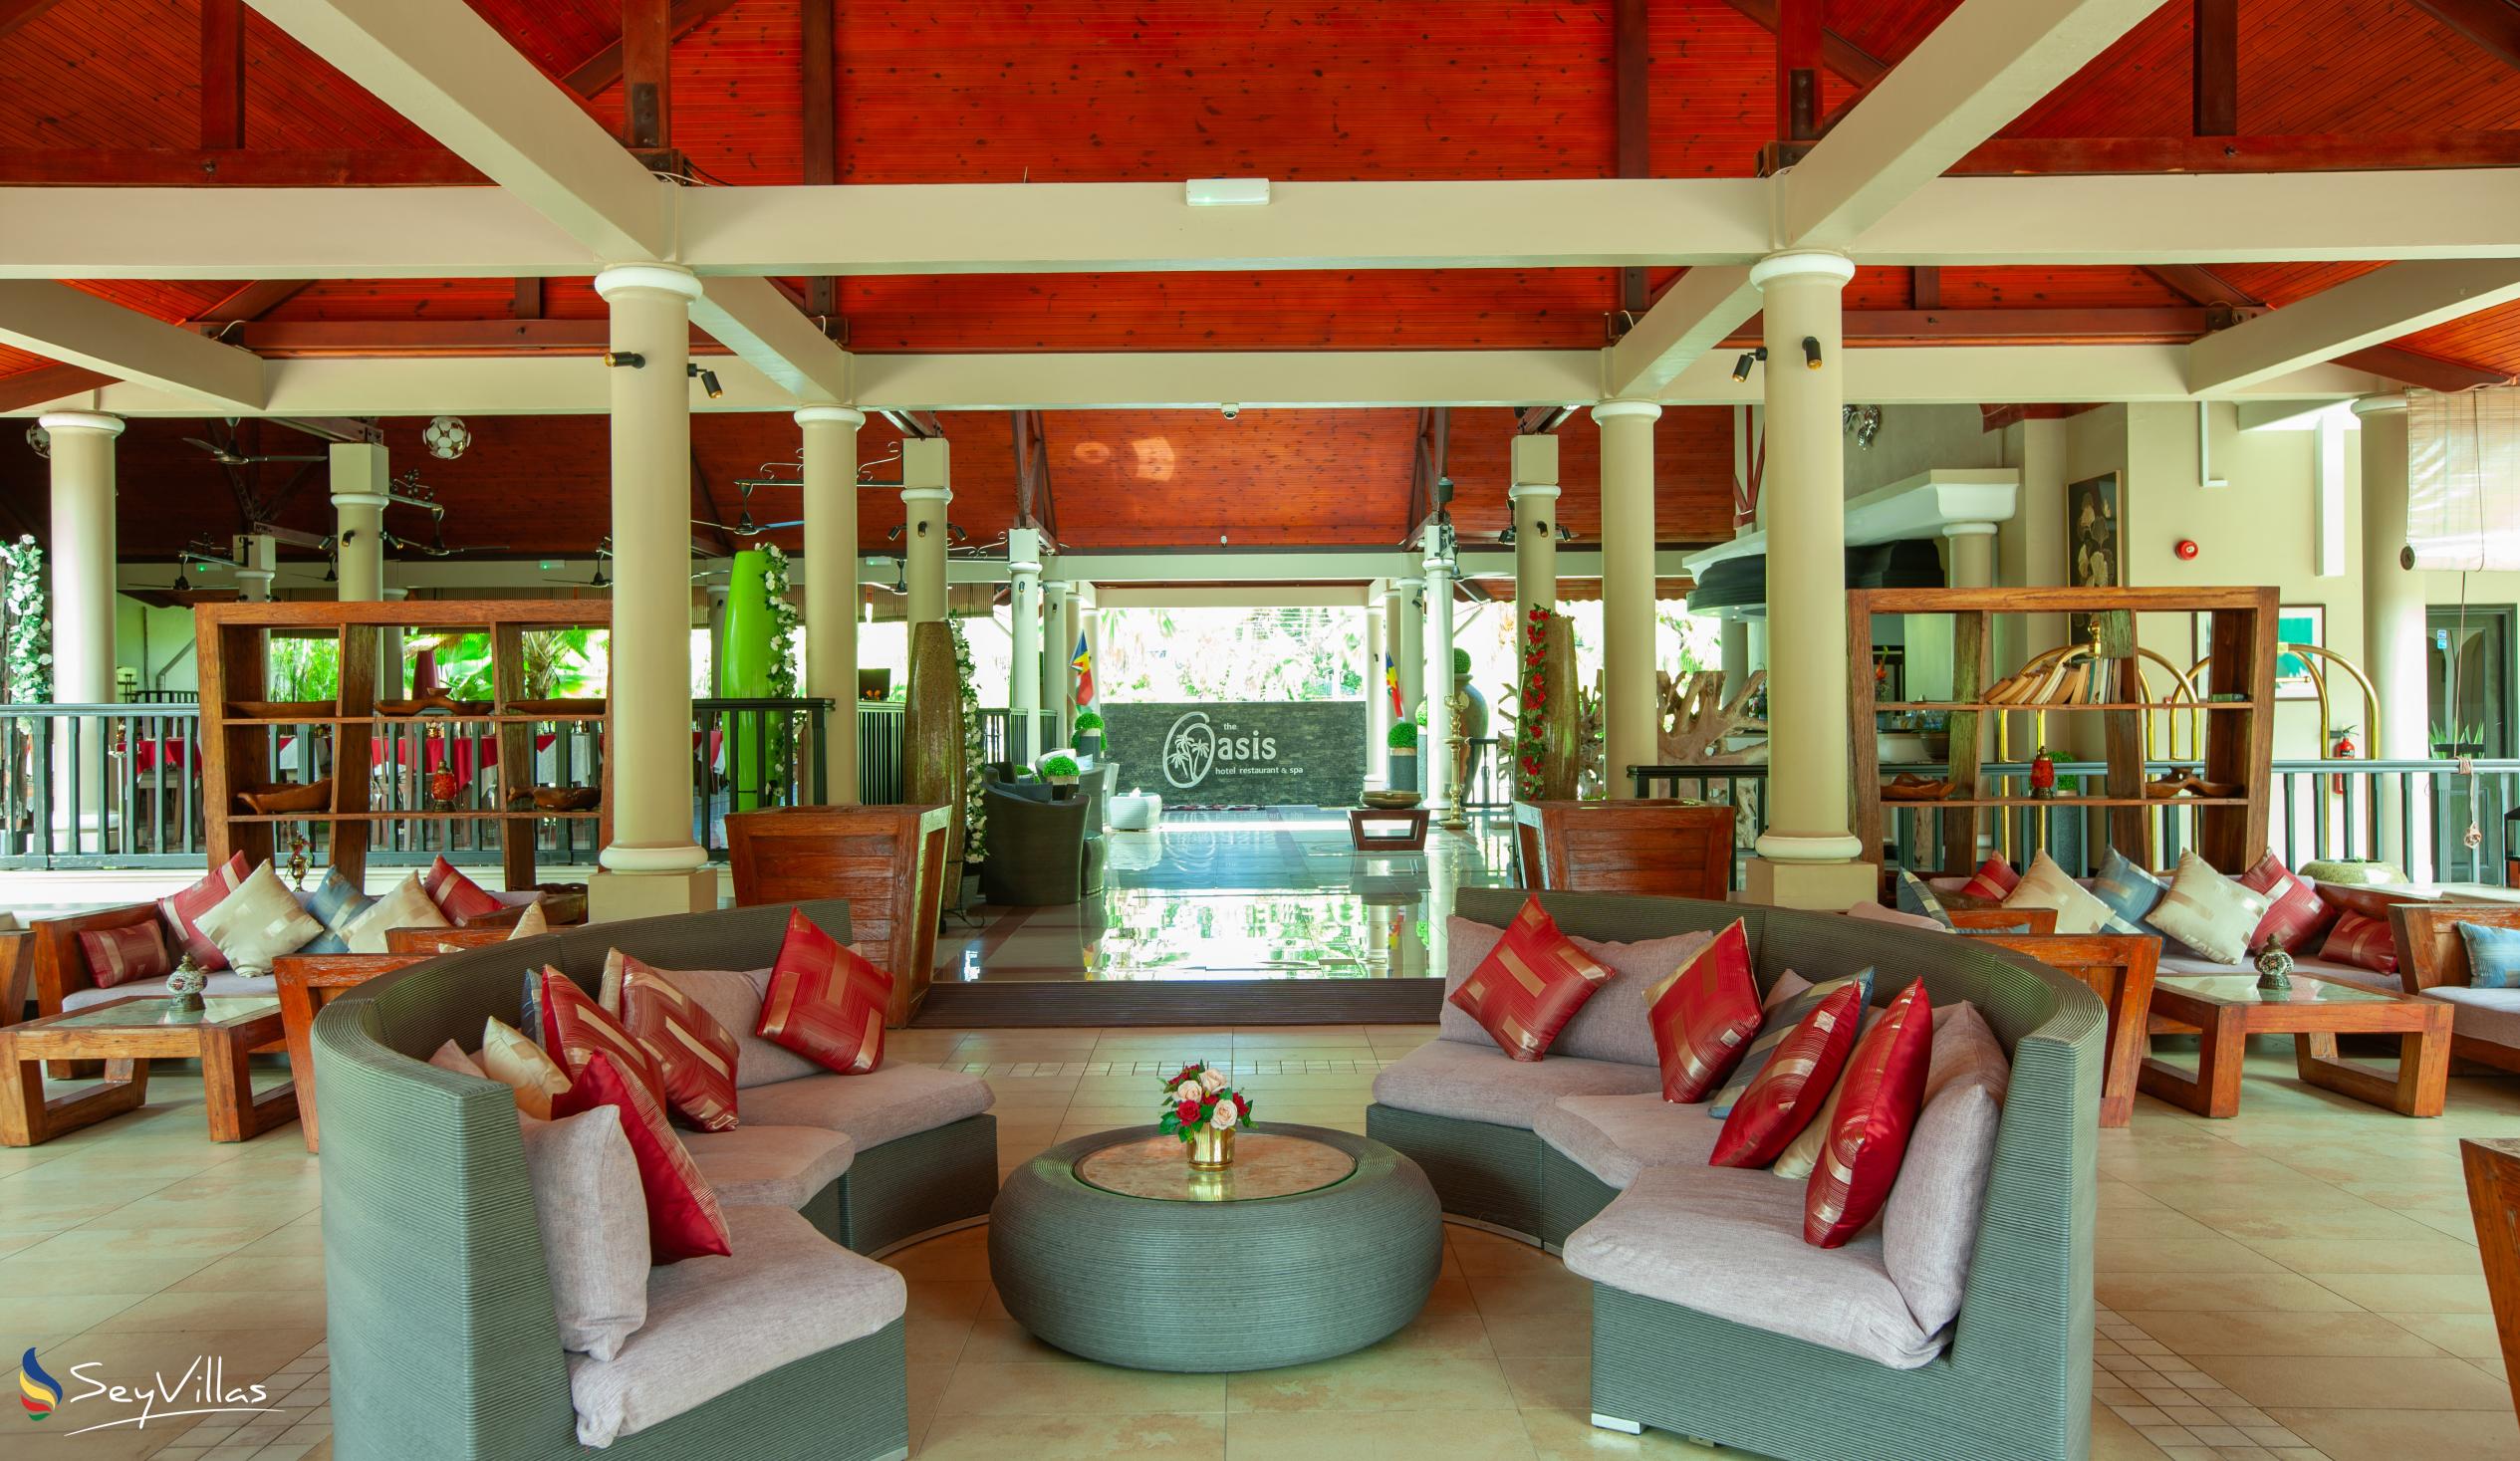 Foto 17: Oasis Hotel, Restaurant & Spa - Intérieur - Praslin (Seychelles)